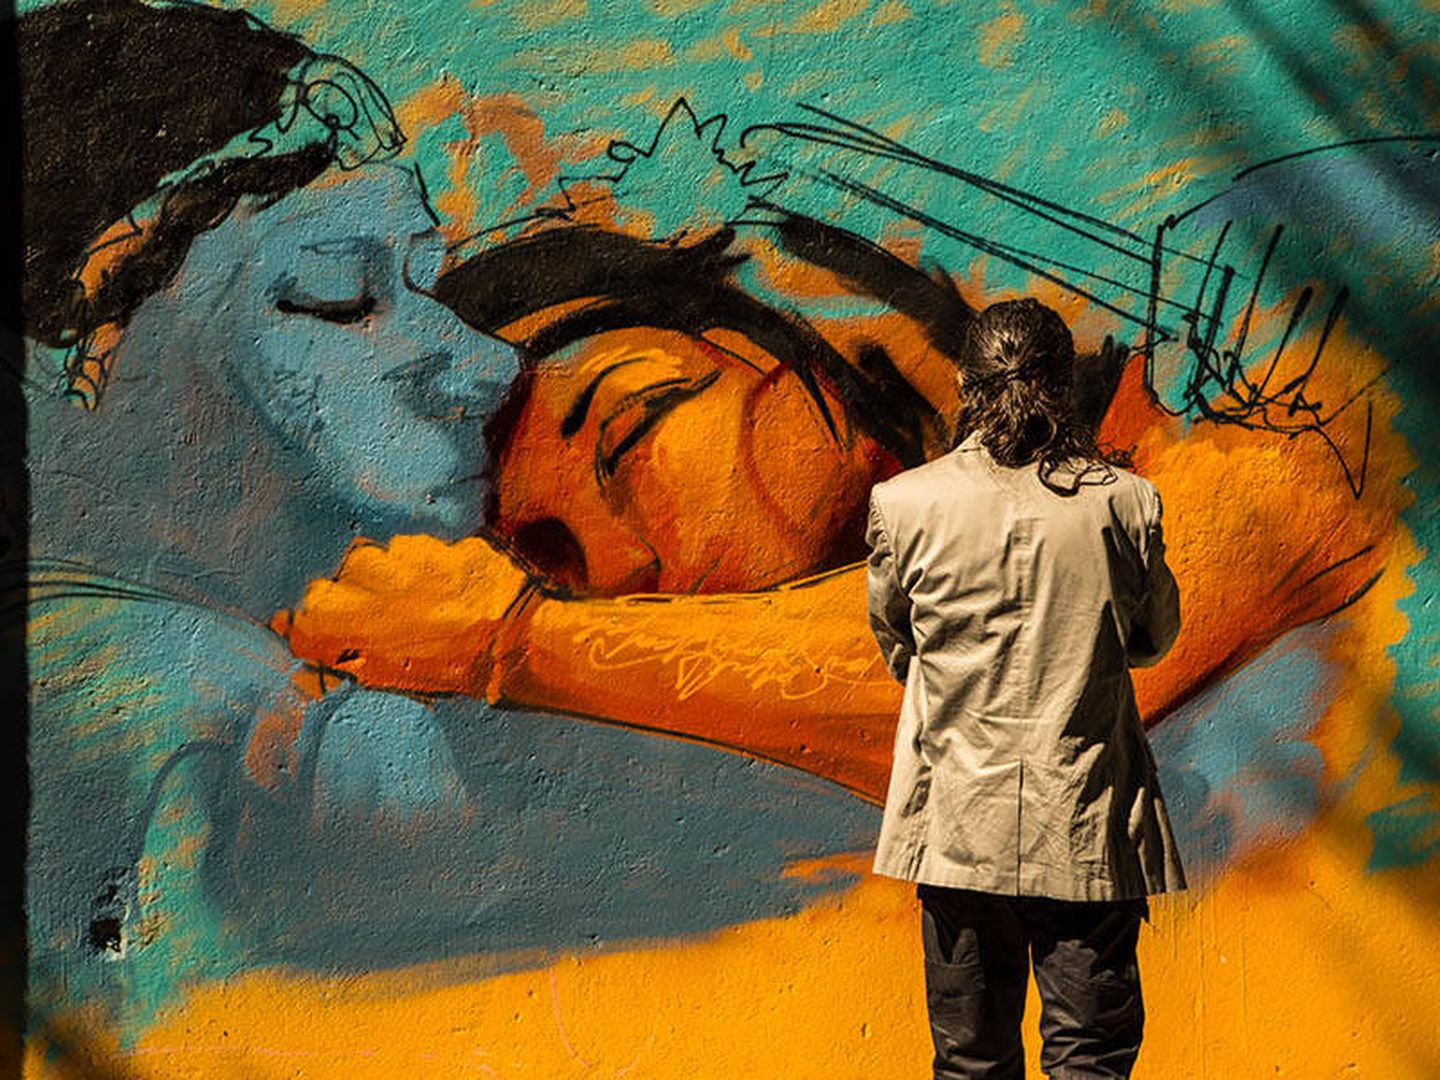 Jorge Pardo, de espaldas frente a un mural. (Cedida)